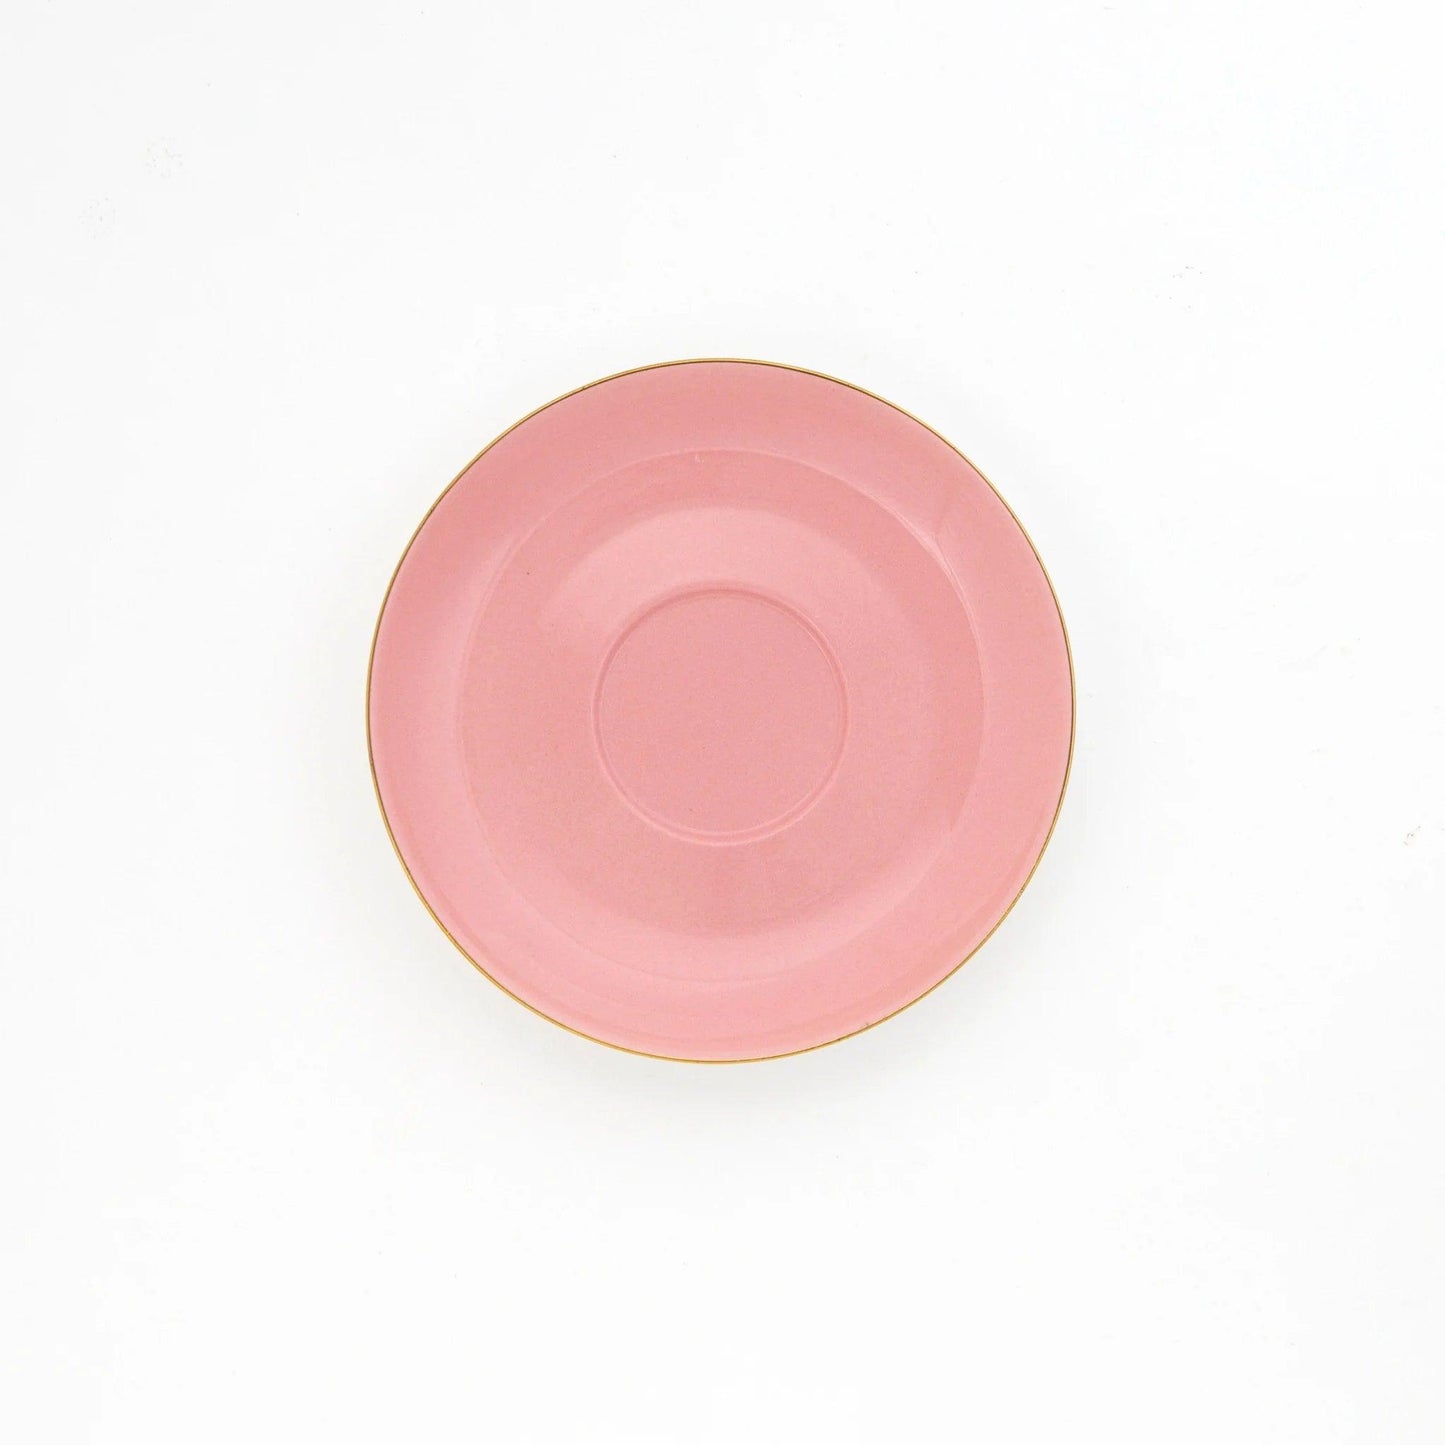 XL Pale Pink Teacup and Saucer - Ginja B